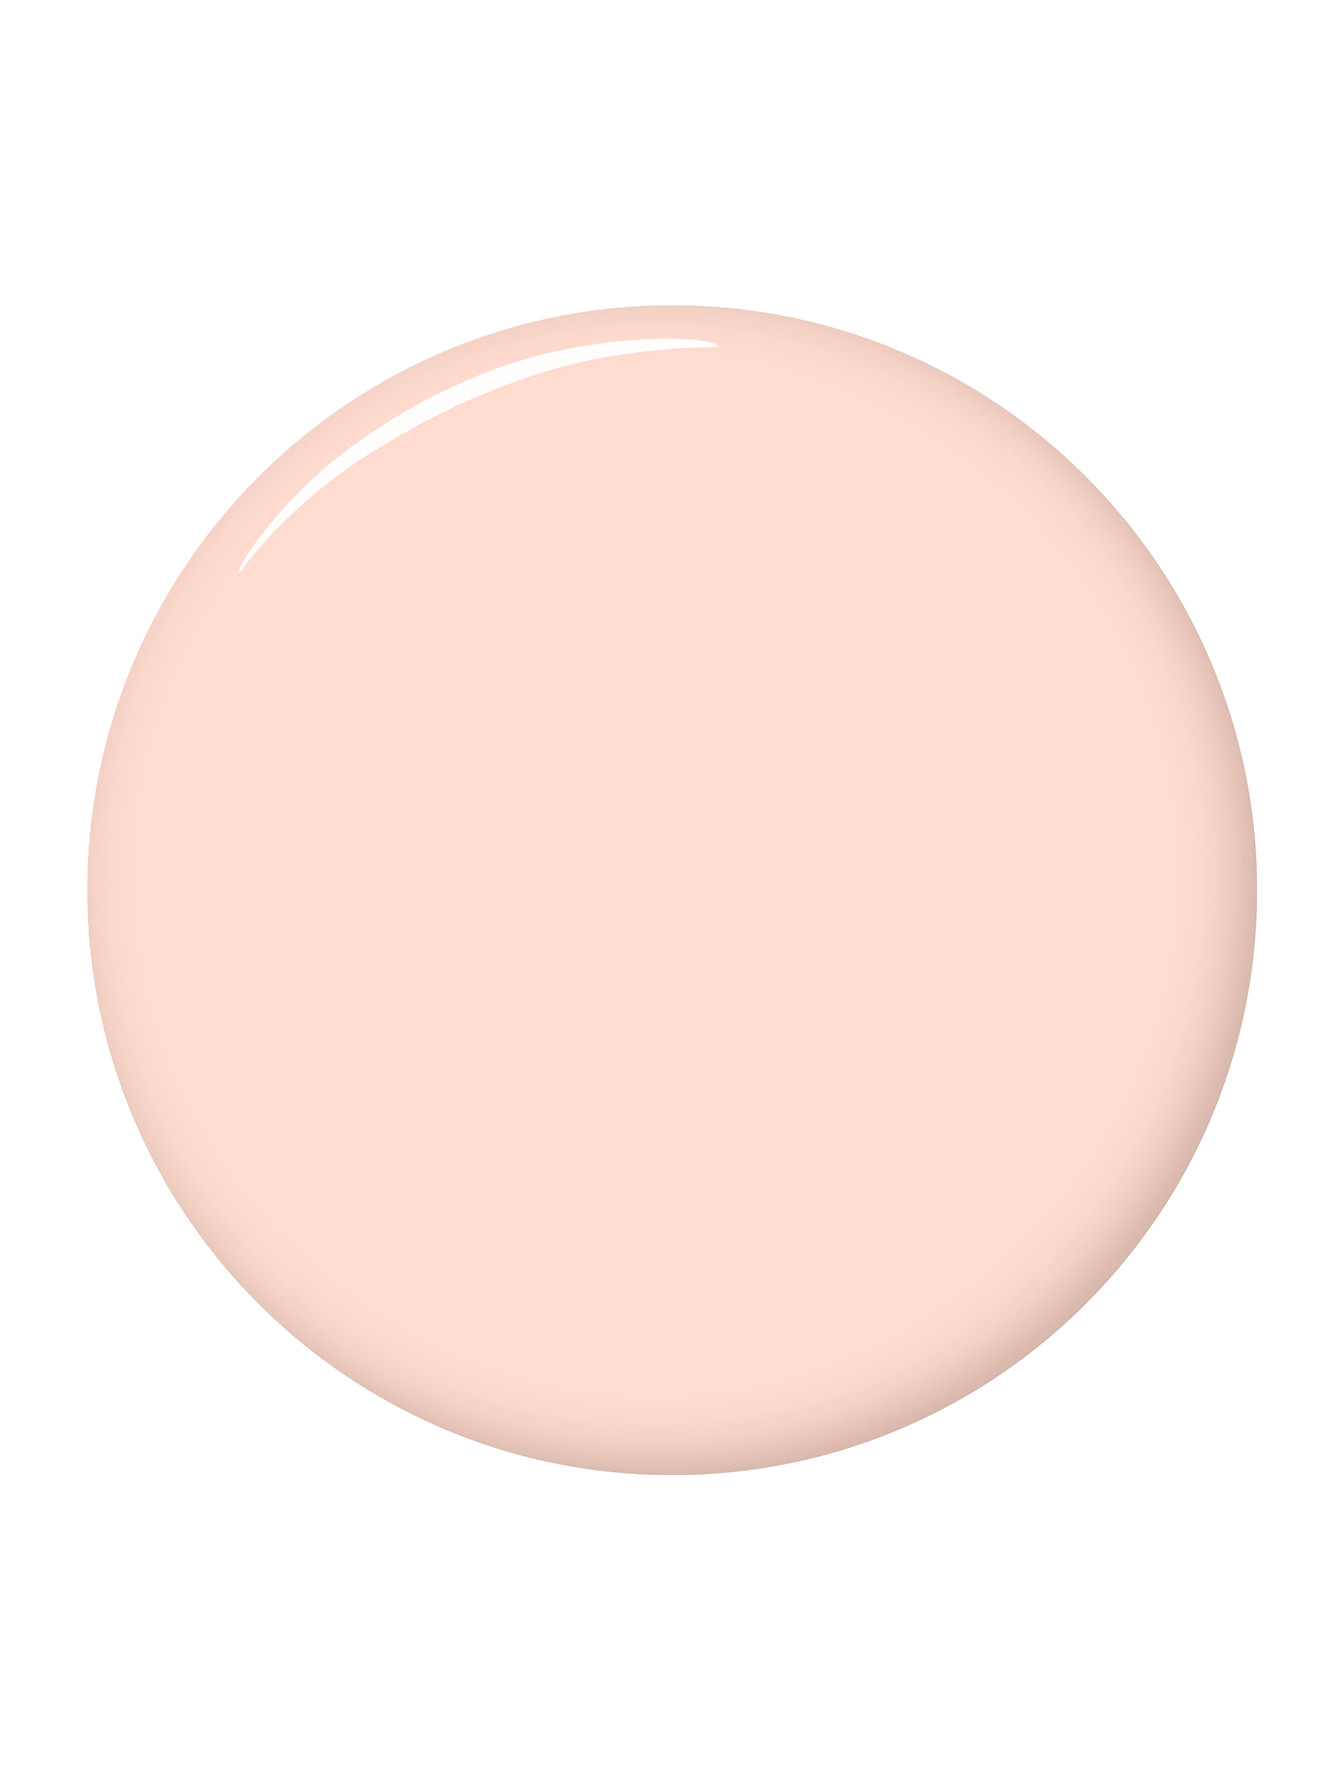 Лак lucci - Cashmere Pink + bond-подготовка, Nail Care, 12+9m - Обтравка1